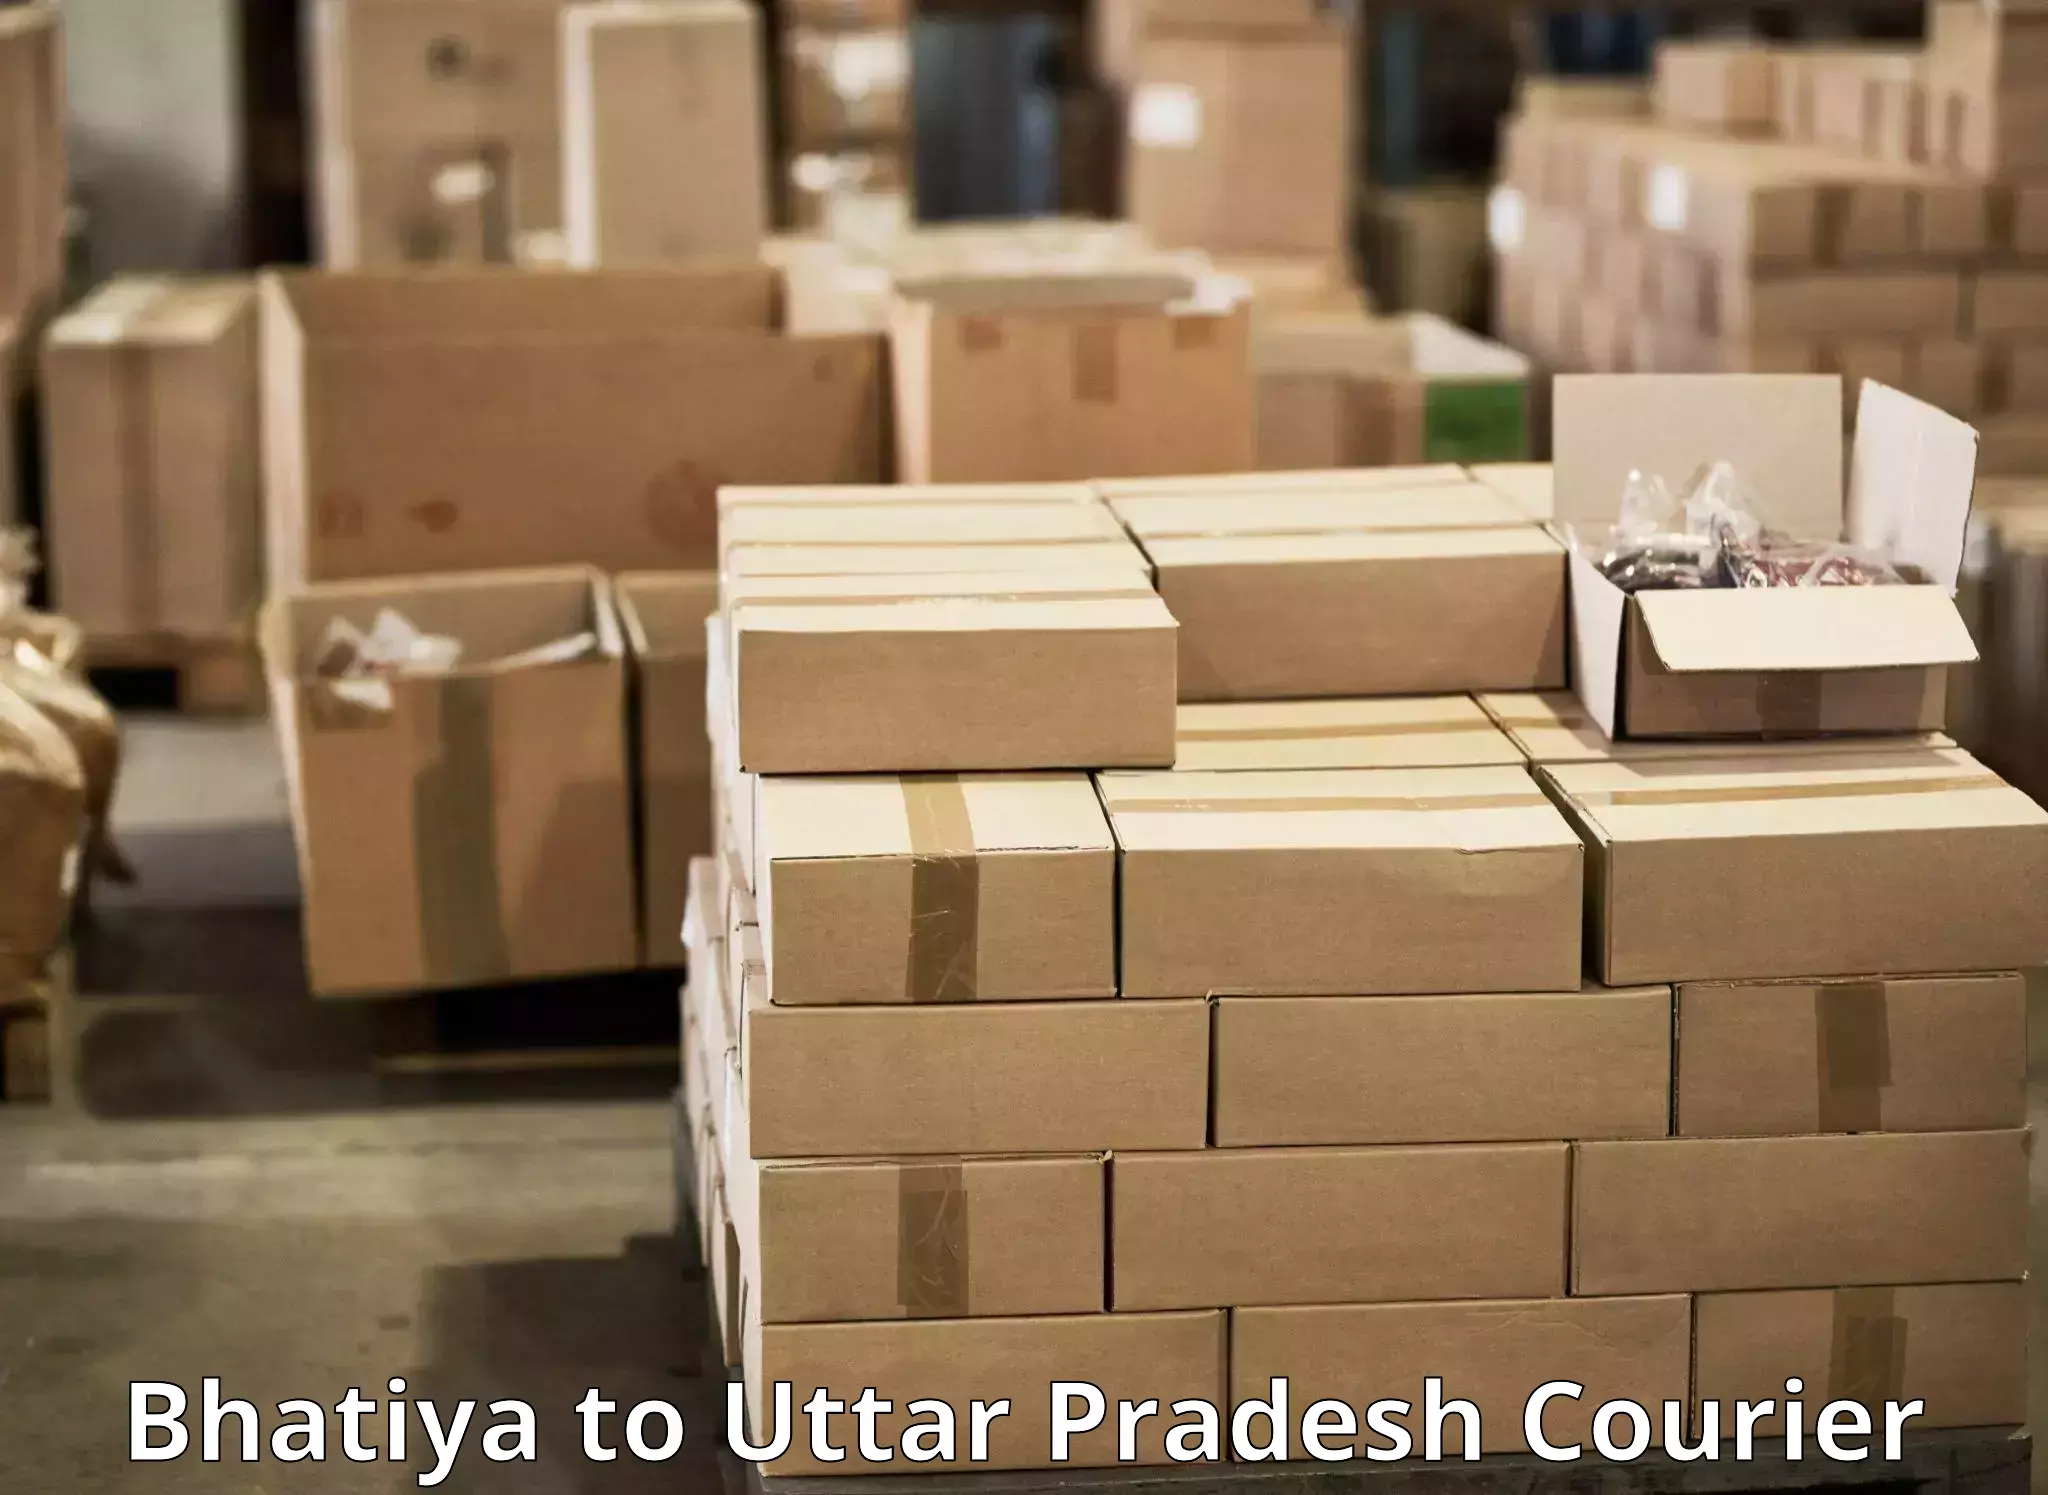 Courier service comparison Bhatiya to Hapur